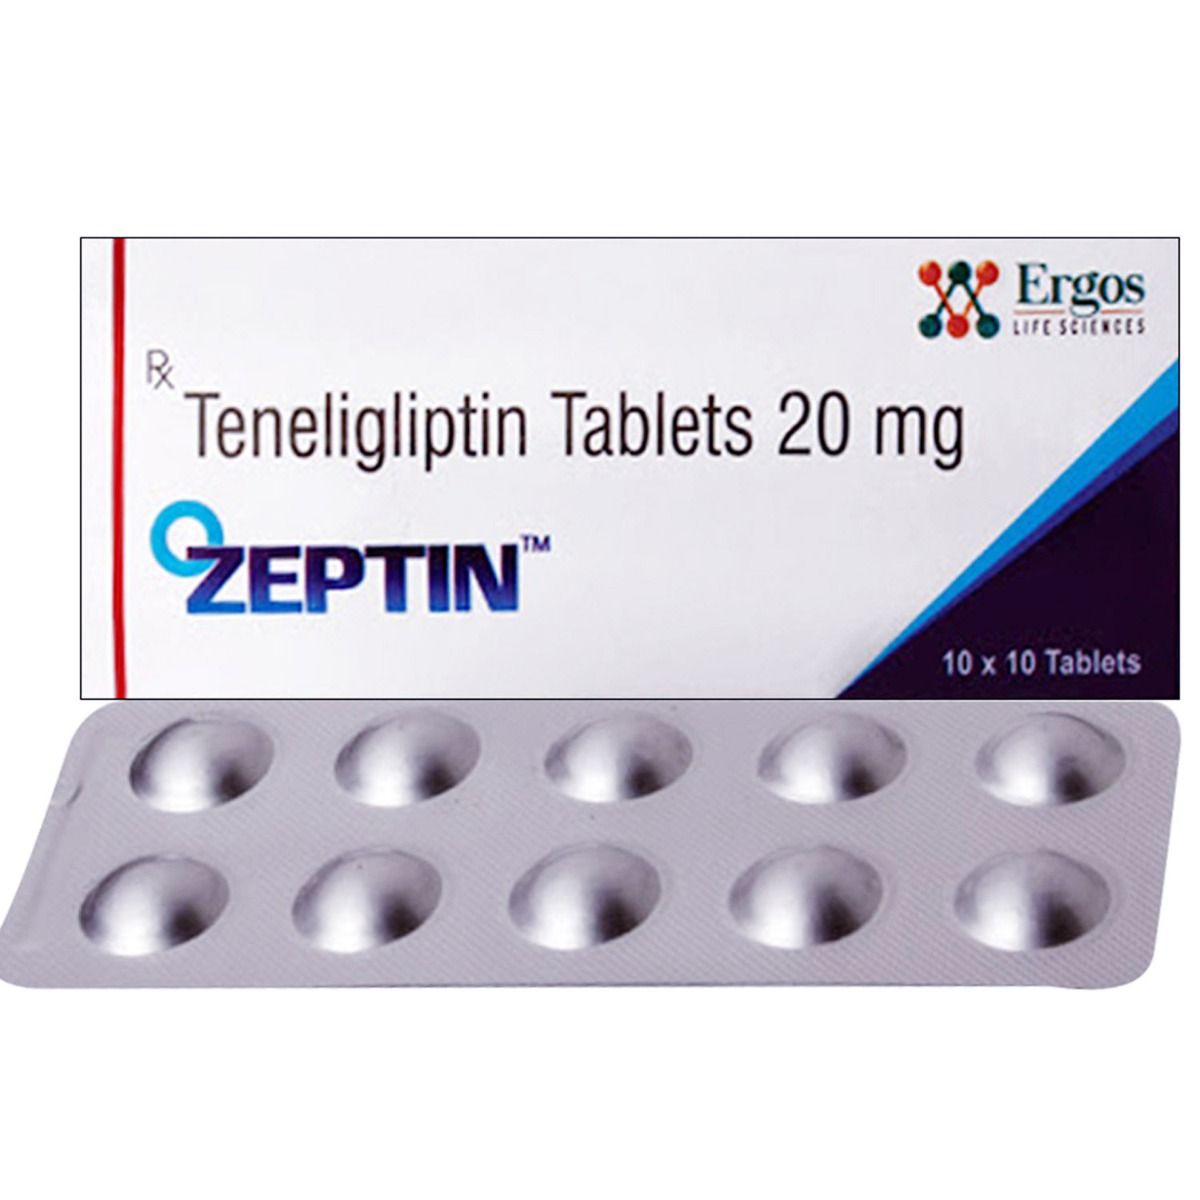 Zeptin 20mg Tablet 10's, Pack of 10 TABLETS